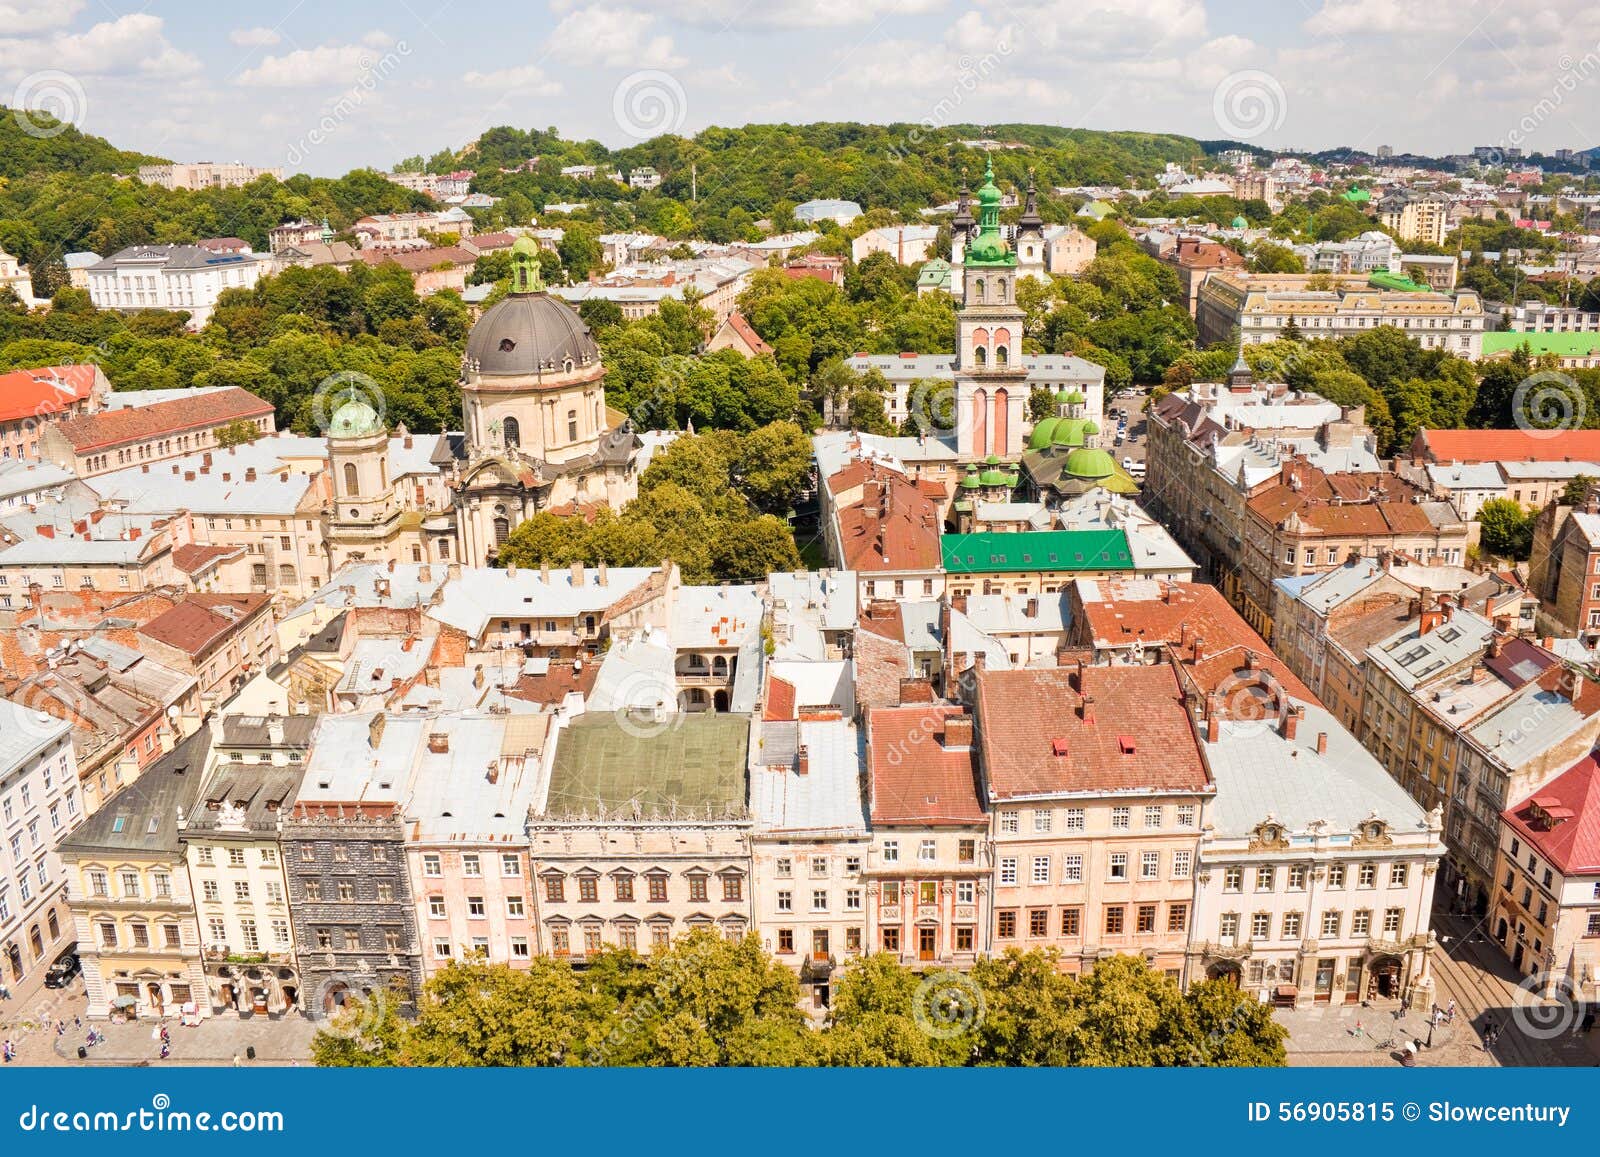 view of lviv (lvov), ukraine